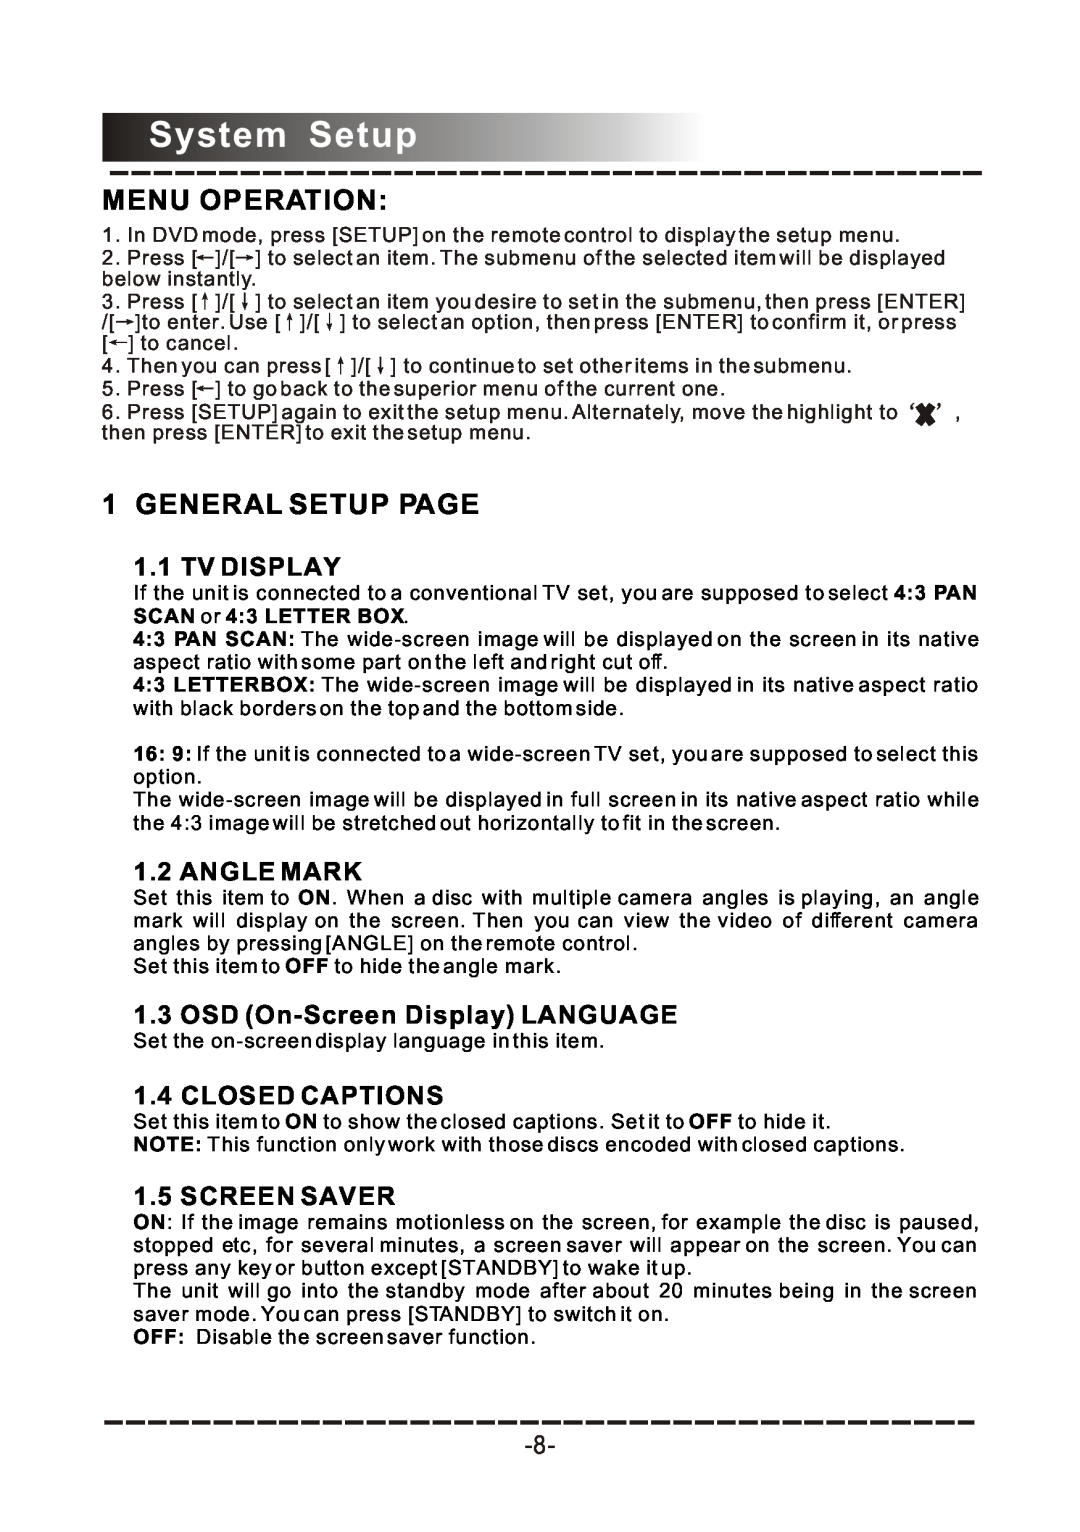 COBY electronic DVD-958 manual System Setup, Menu Operation, General Setup Page 